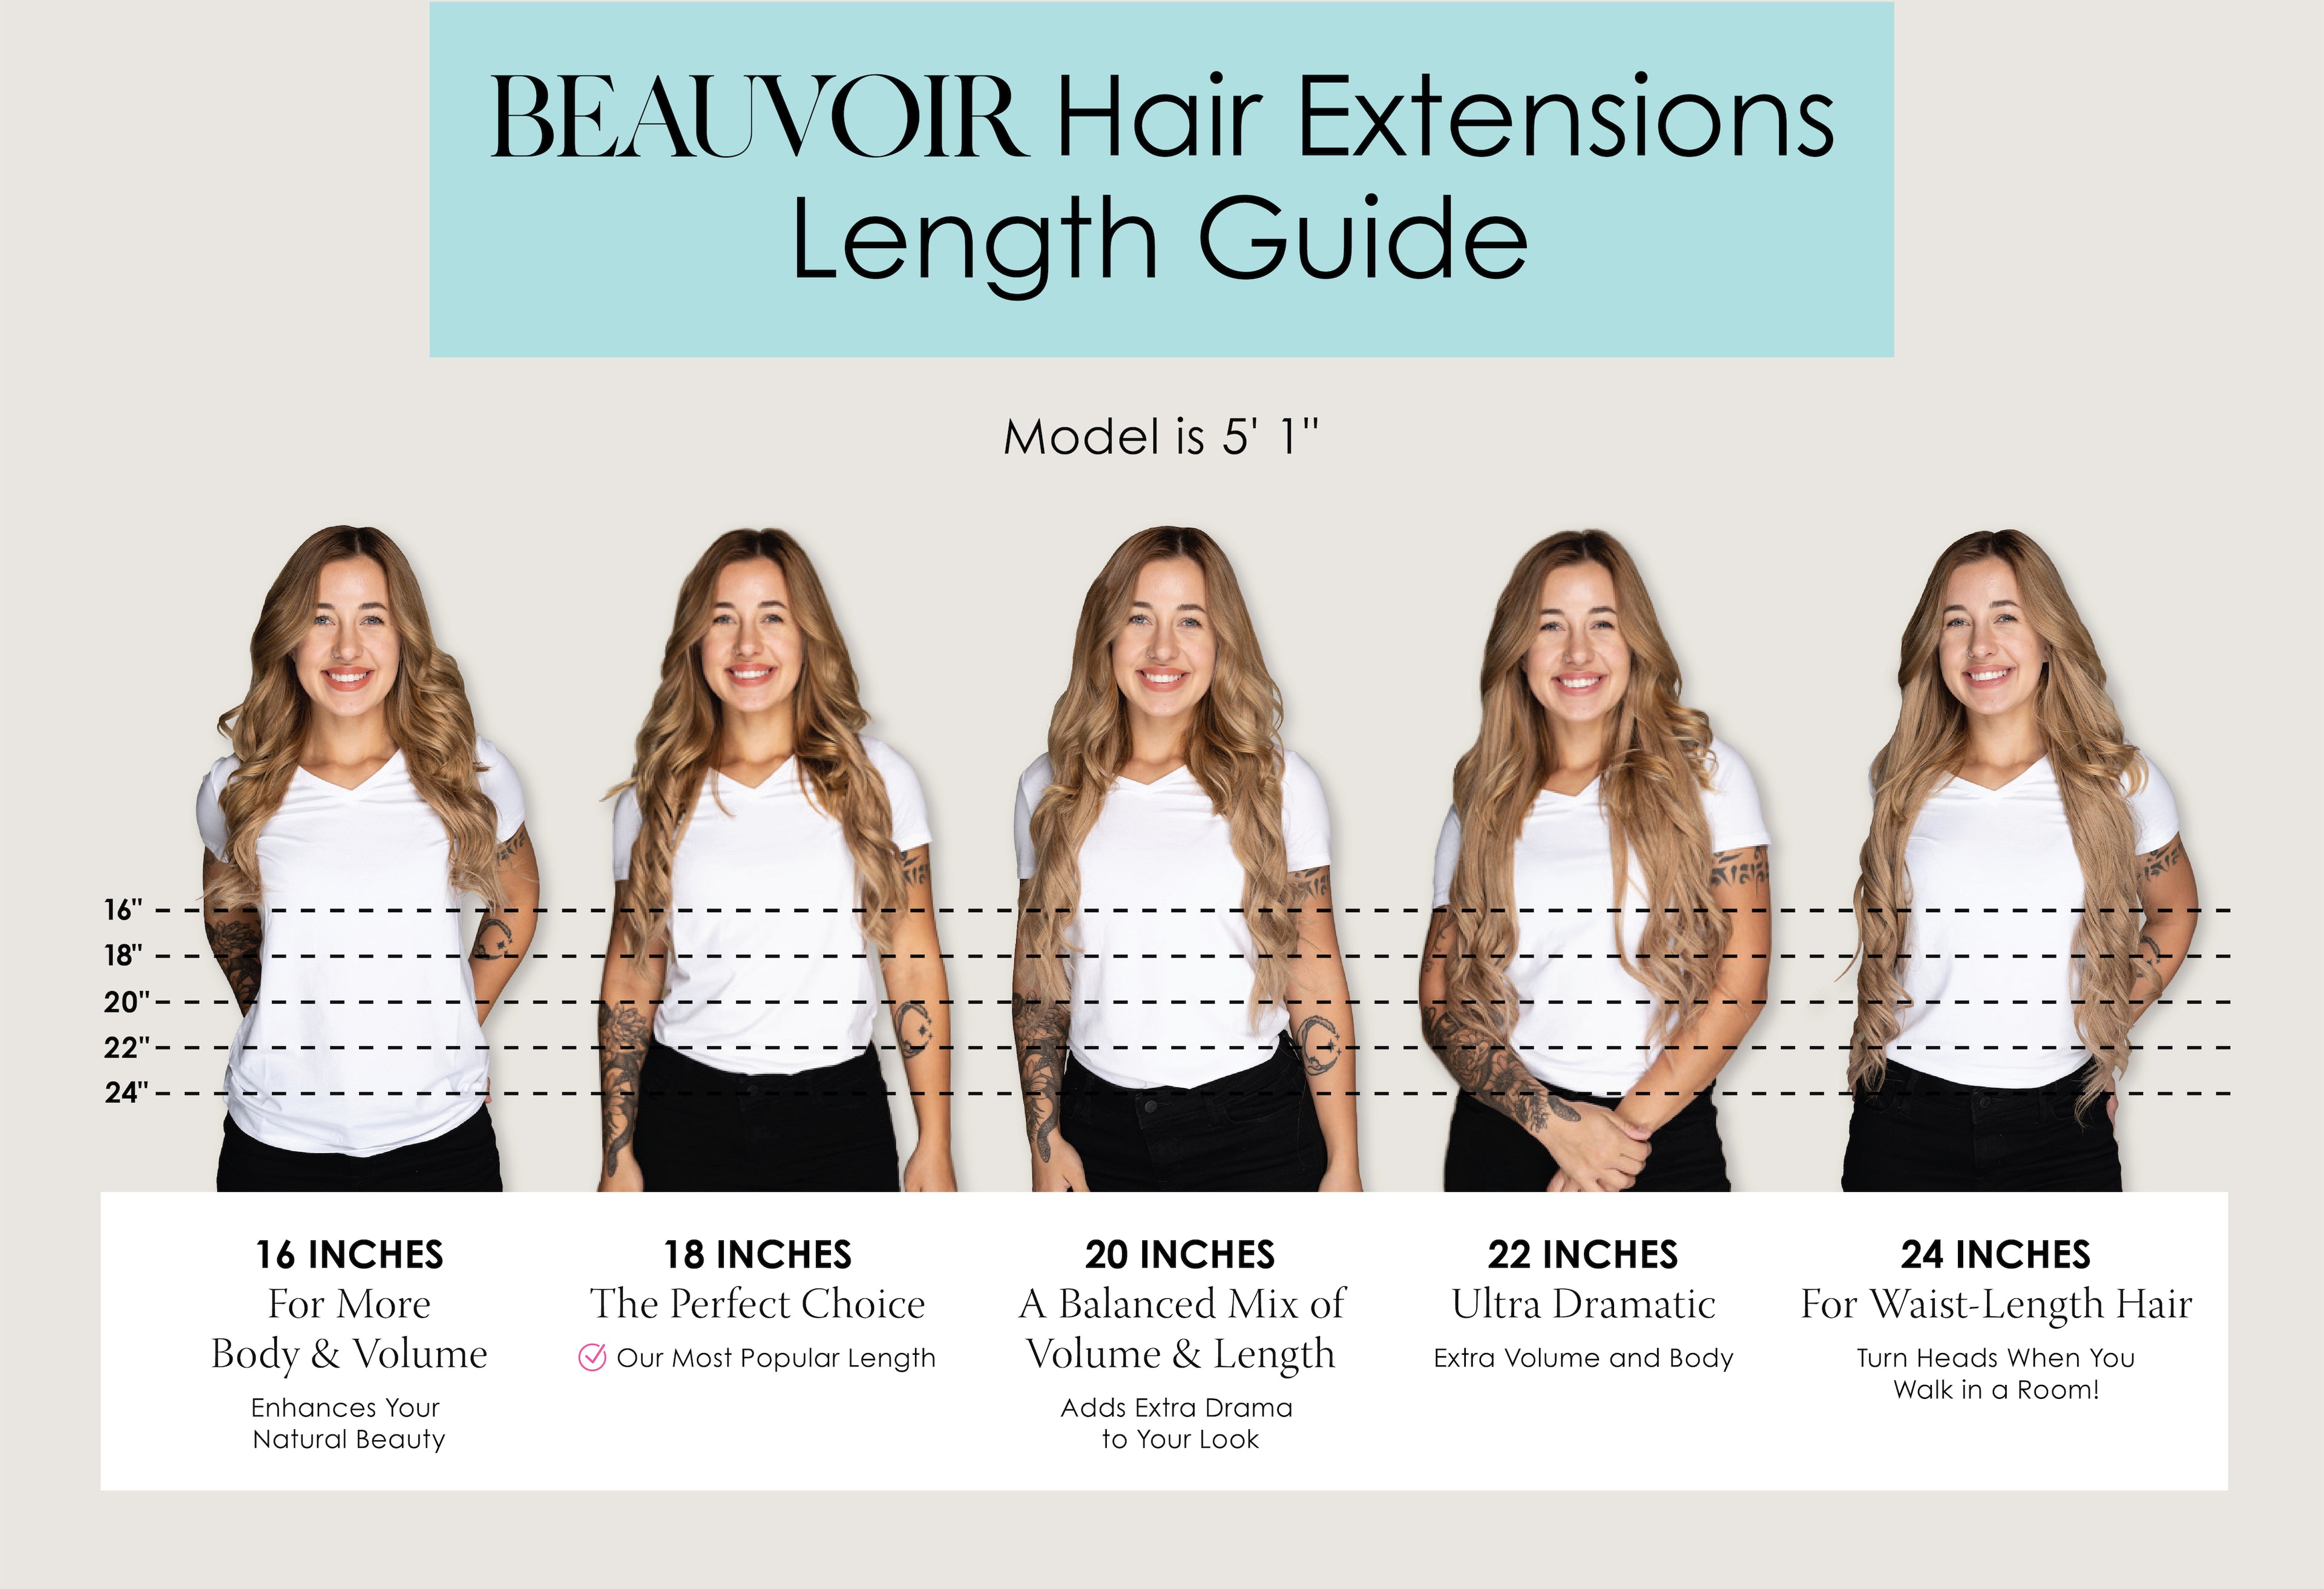 hair lengths, hair extension lengths, length guide, hair extension length guide, hair extension length chart